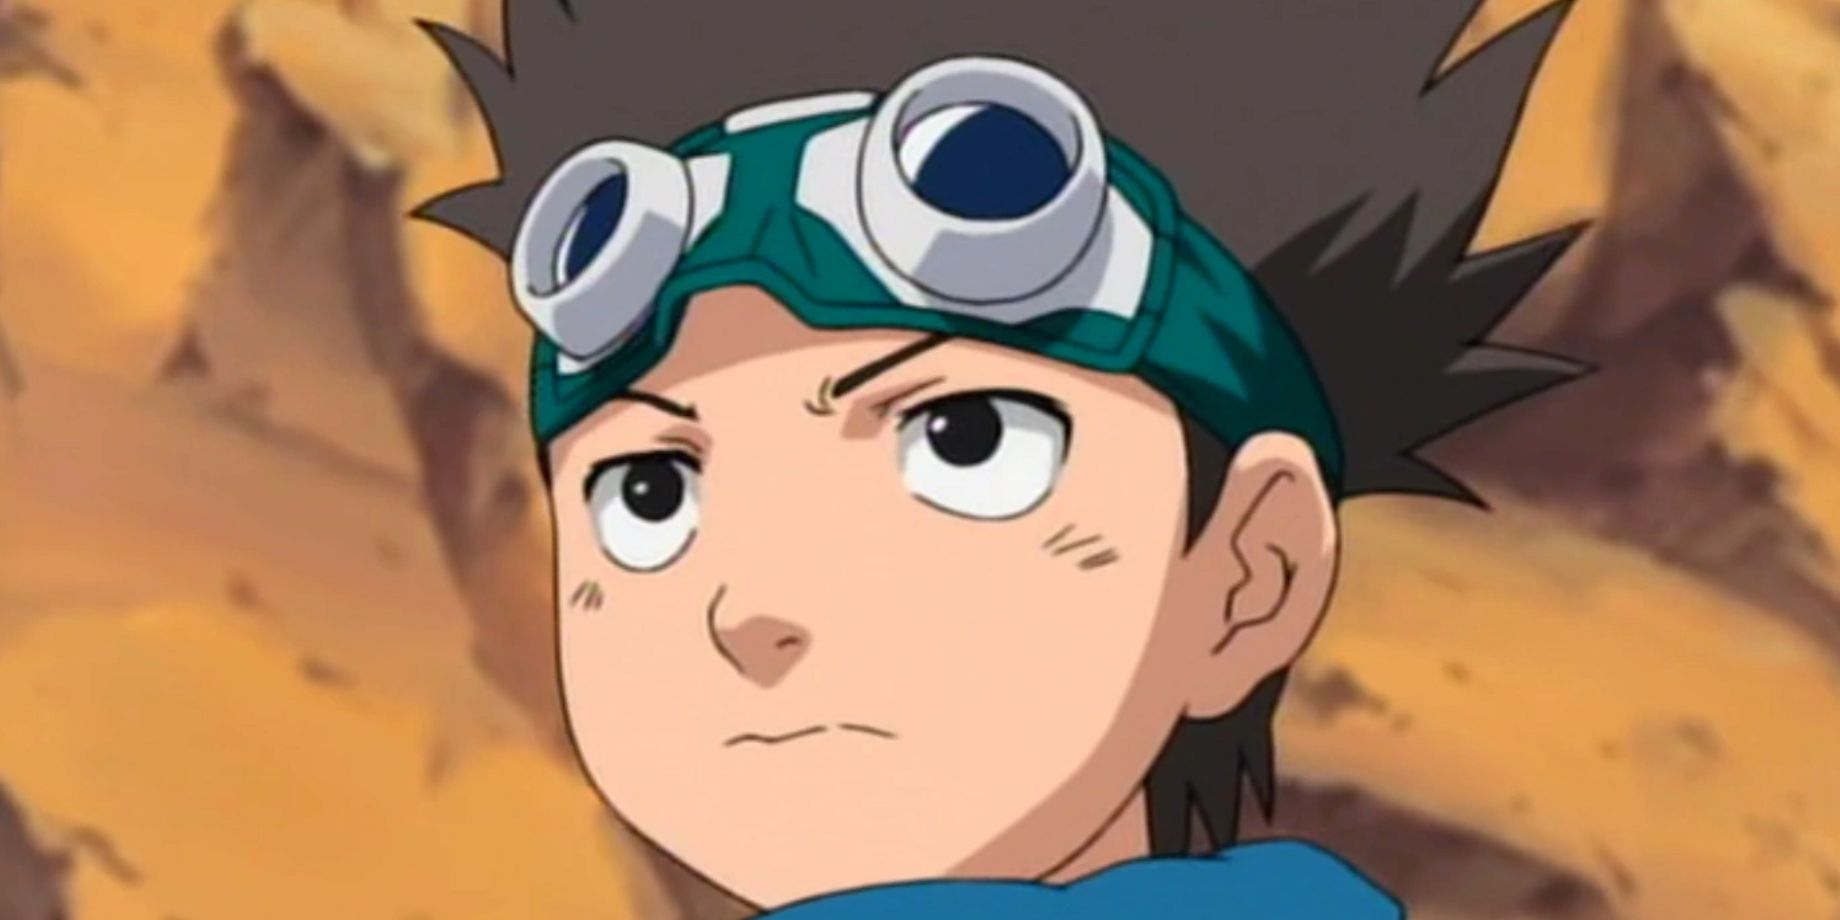 Konohamaru Sarutobi as a child wearing goggles on his head in Naruto